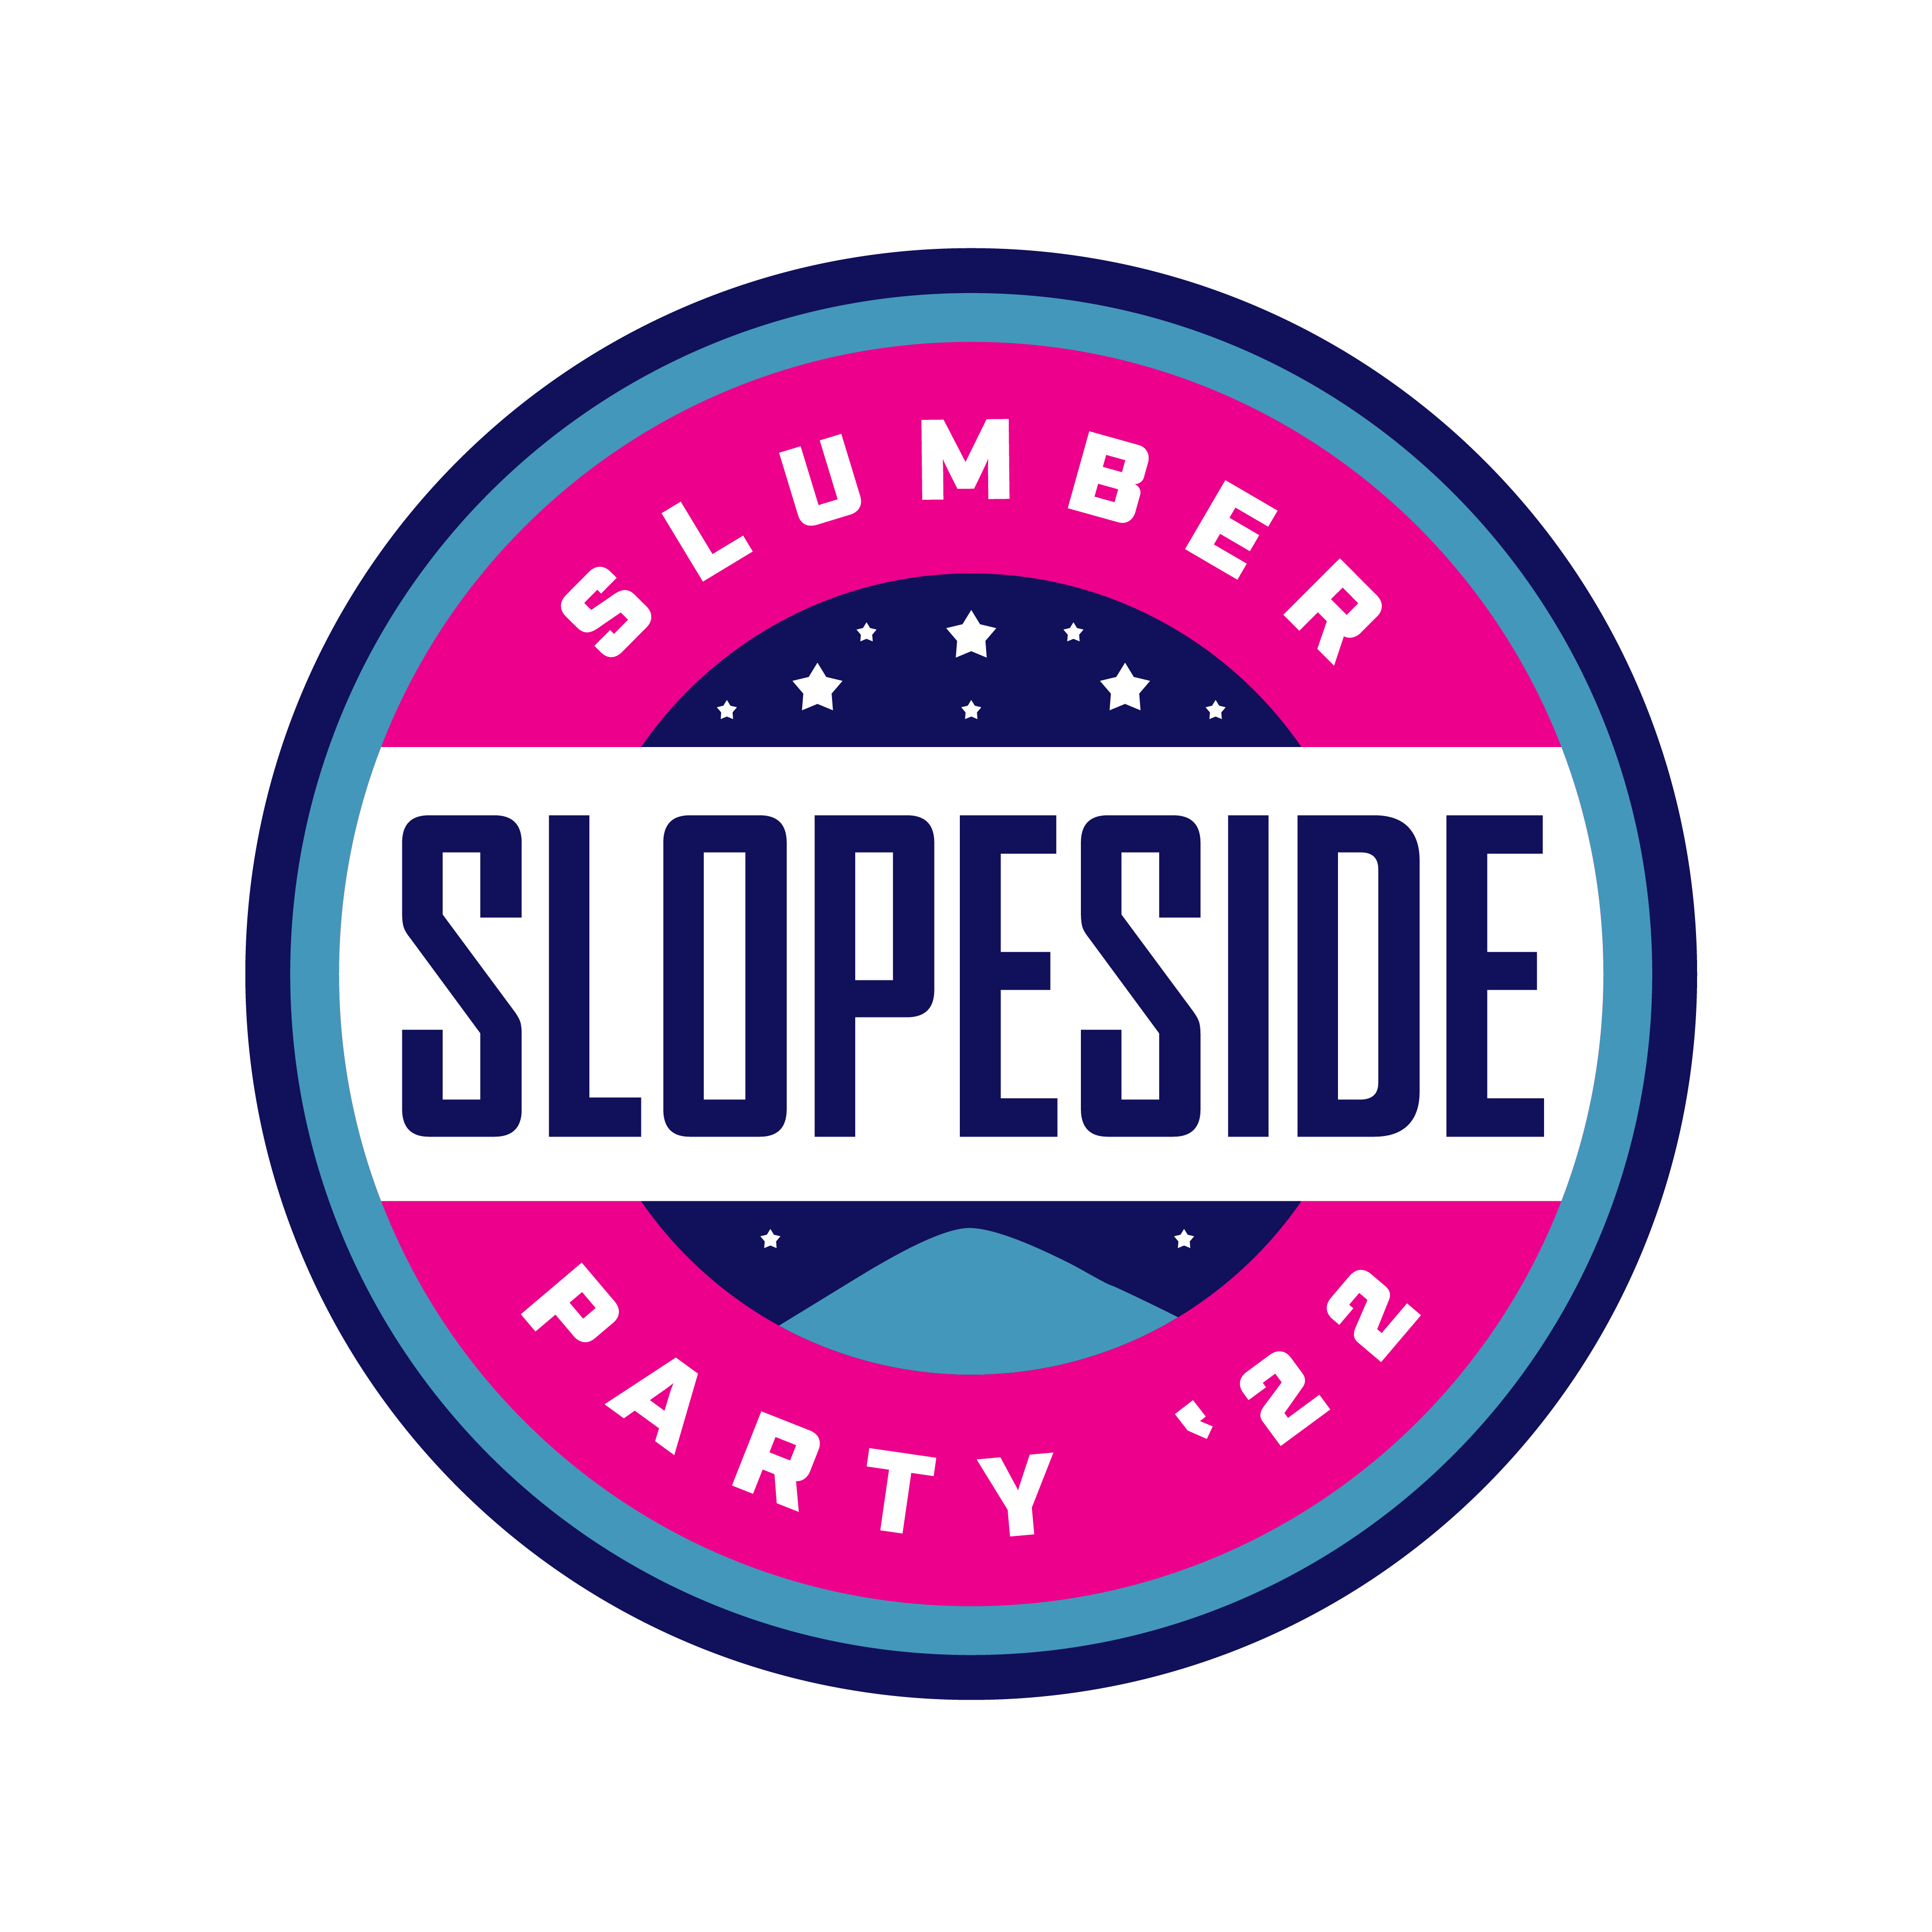 Slopeside Slumber Party logo design by logo designer Pod Design Shop for your inspiration and for the worlds largest logo competition